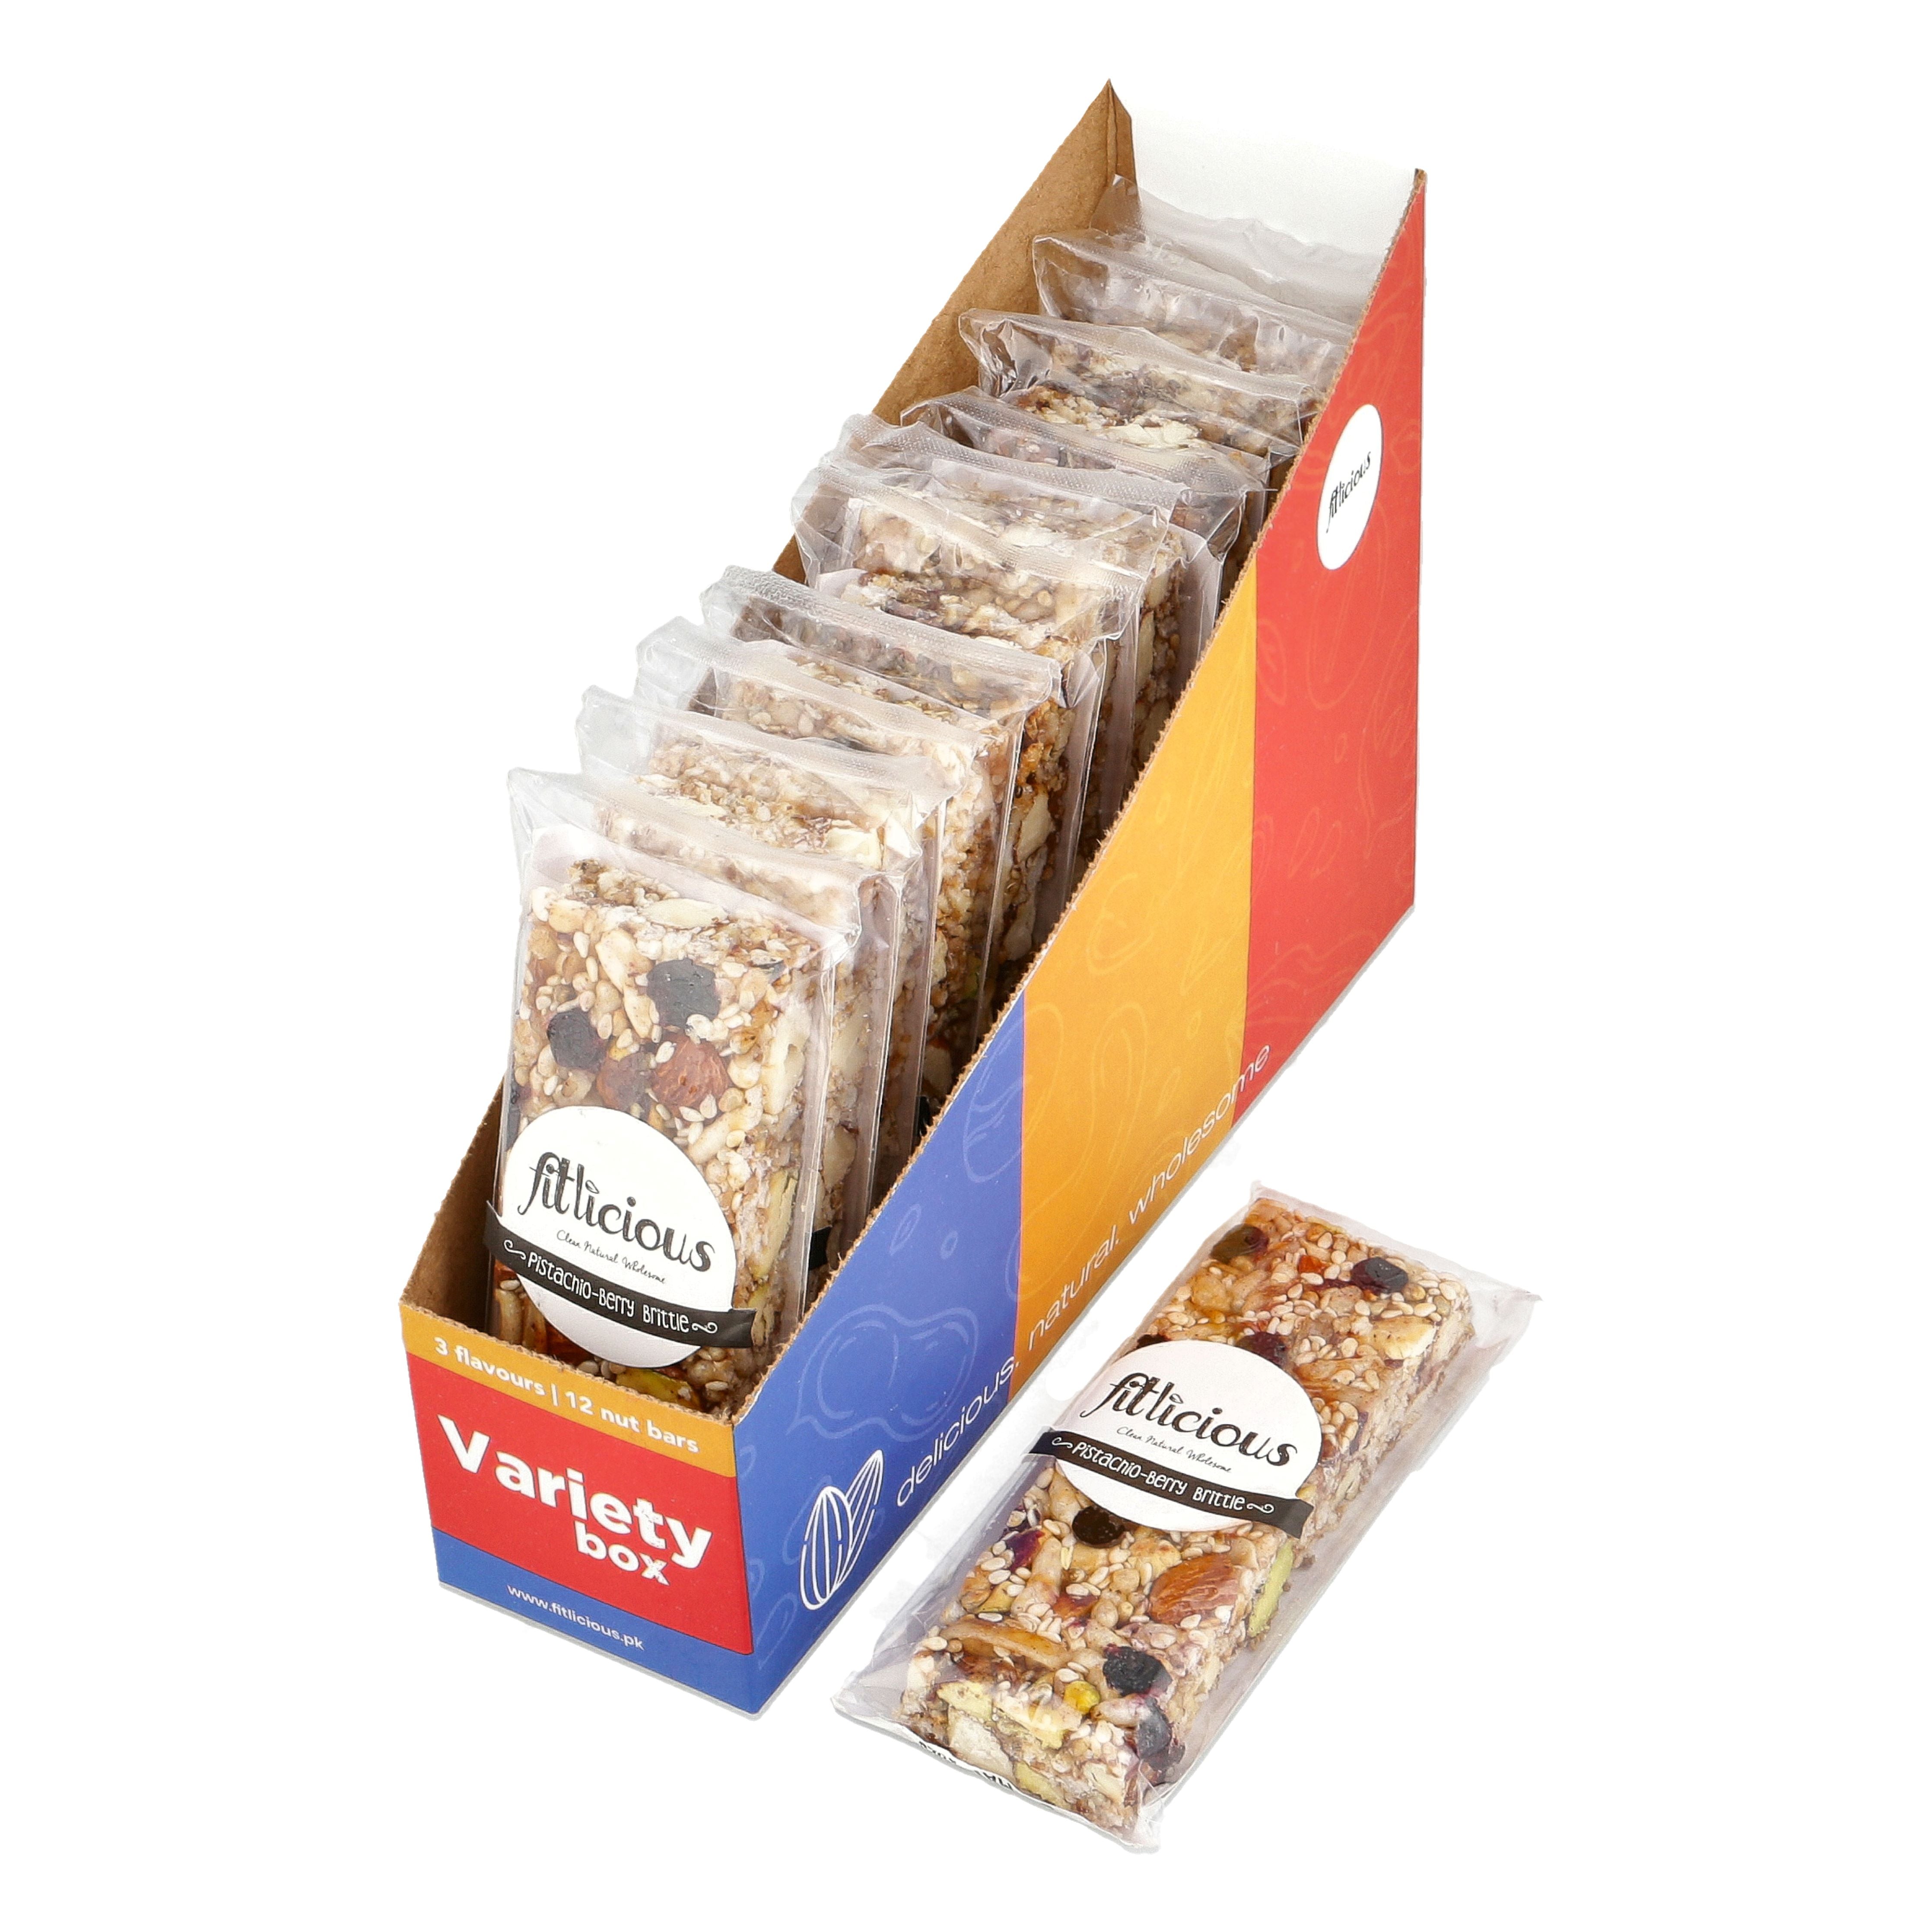 Variety Box Nut bars (box of 12)